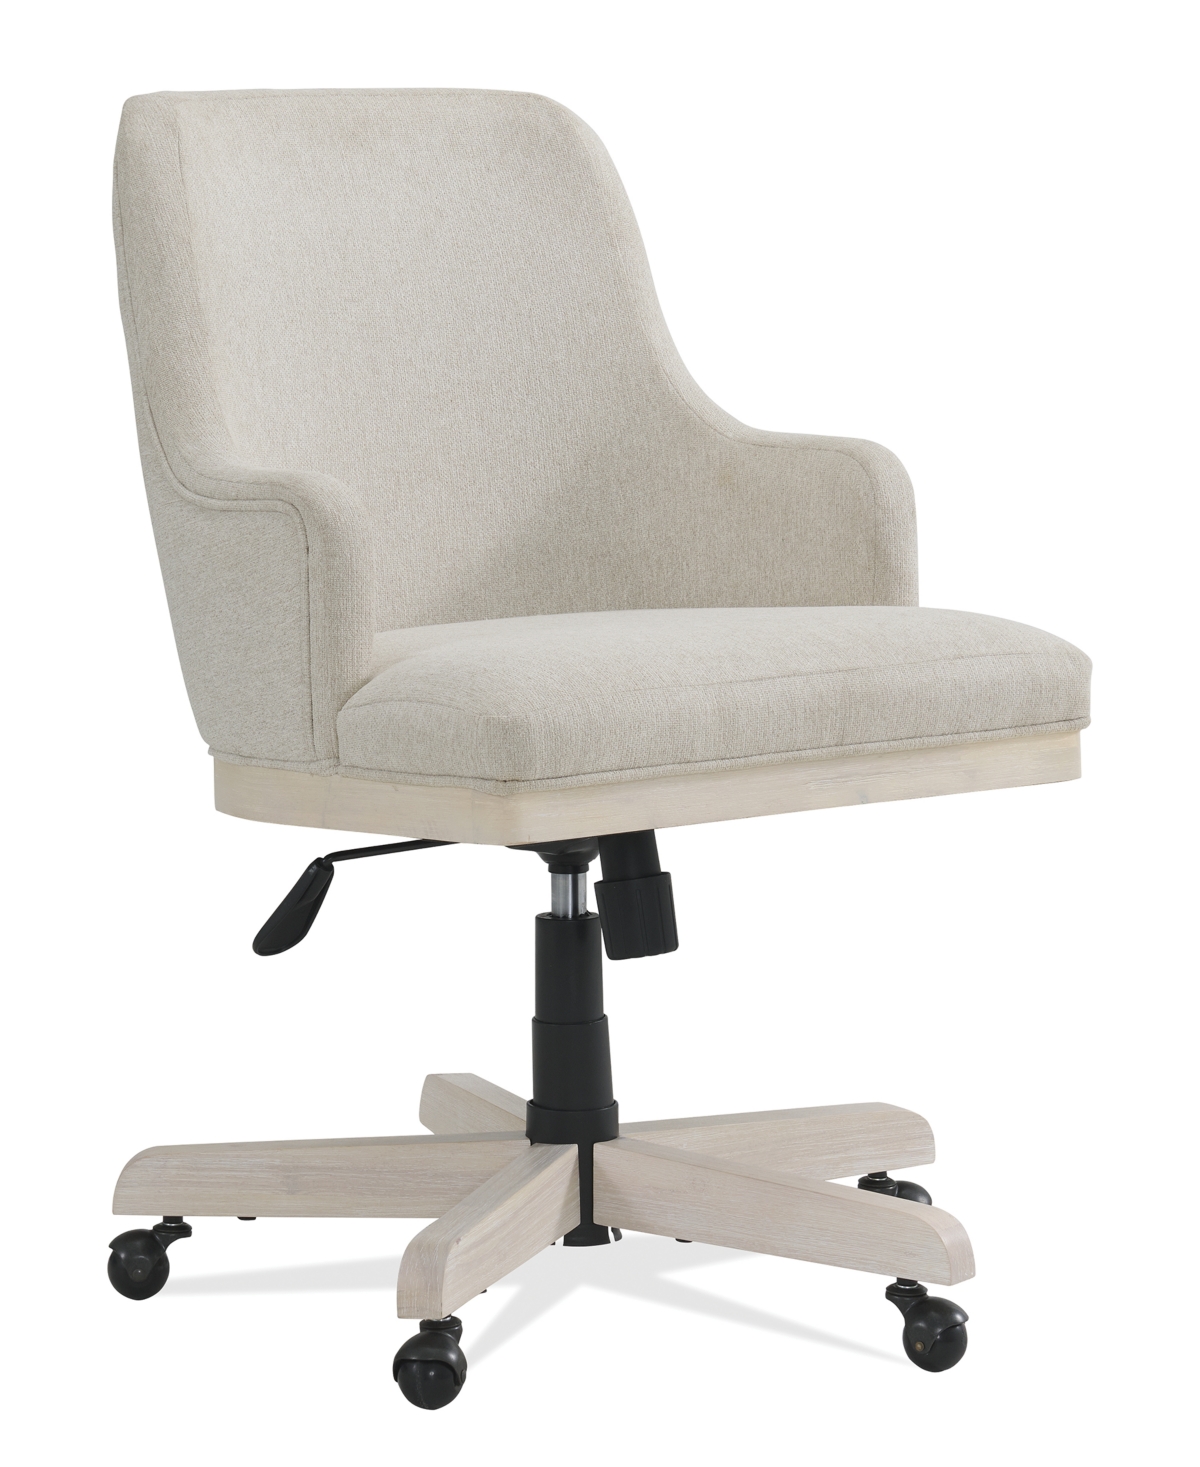 Furniture Maren 36" Polyester Upholstered Desk Chair In White Sand